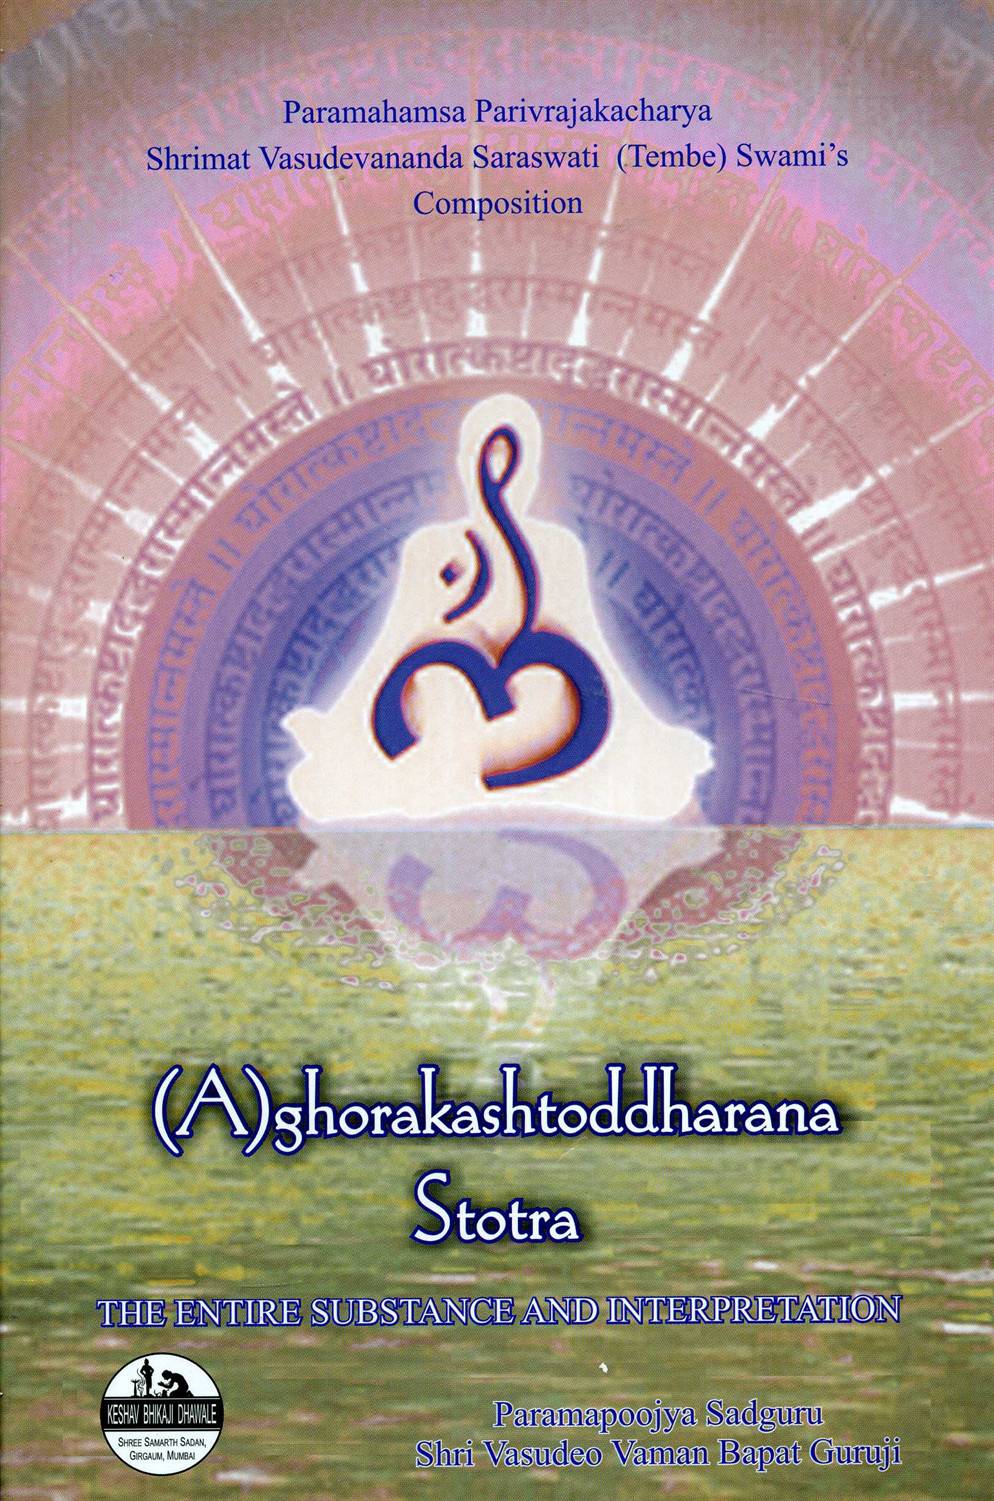 (A) ghorakashtoddharana Stotra